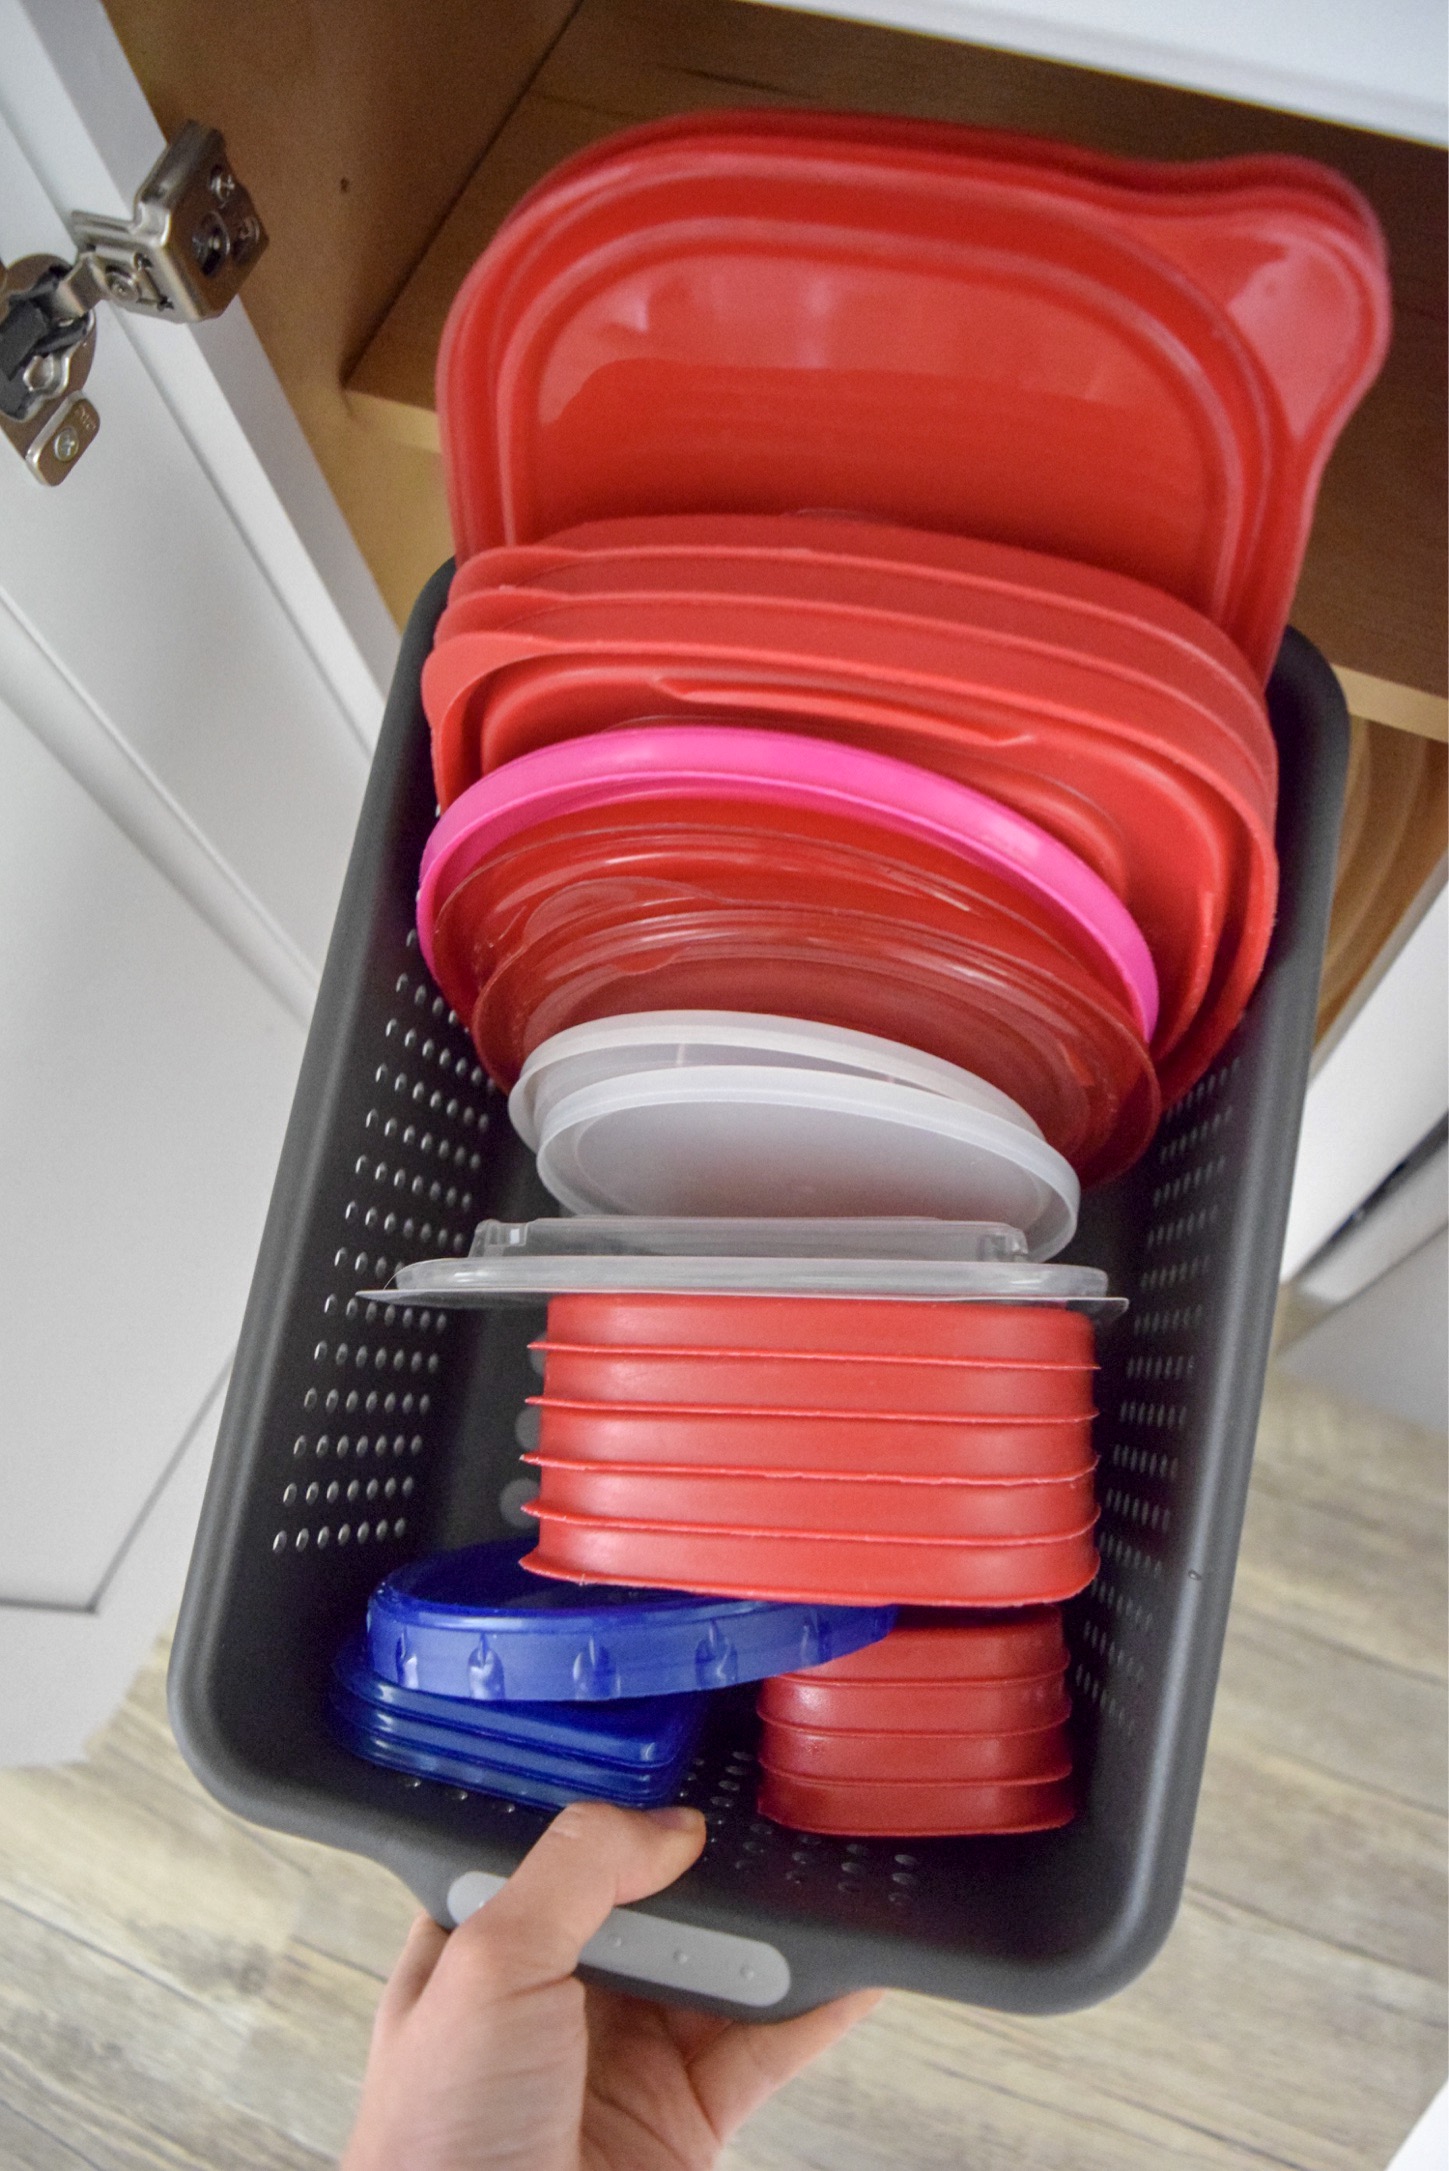 Kitchen Organization: Tupperware - The Simply Organized Home